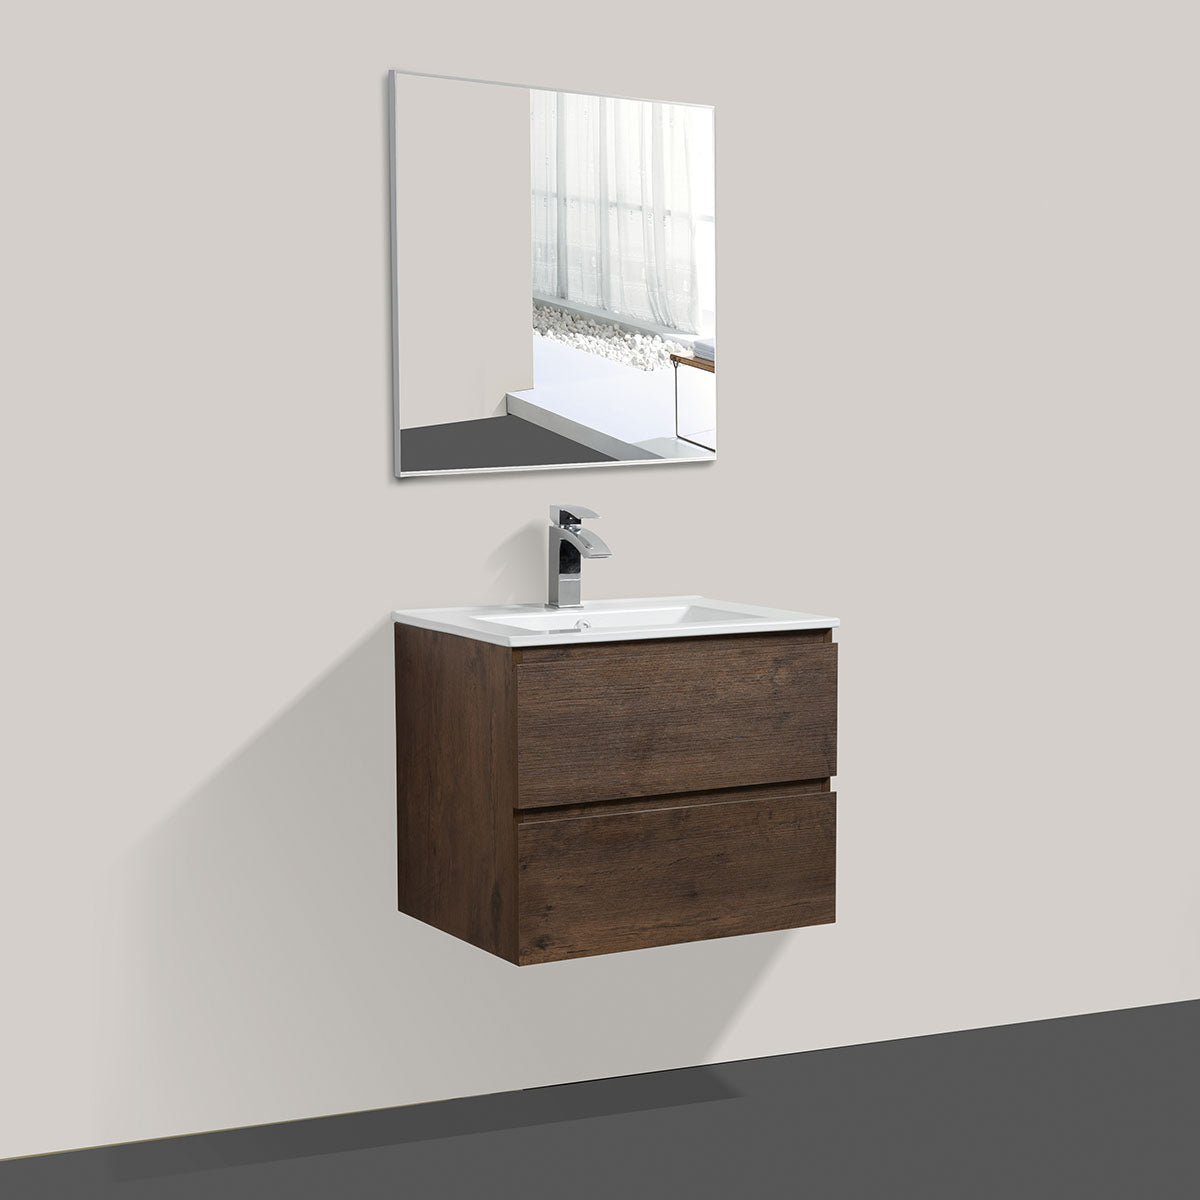 24" Angela Wall Hung Vanity & Ceramic Sink (Rose Wood） V9005 Series - iStyle Bath